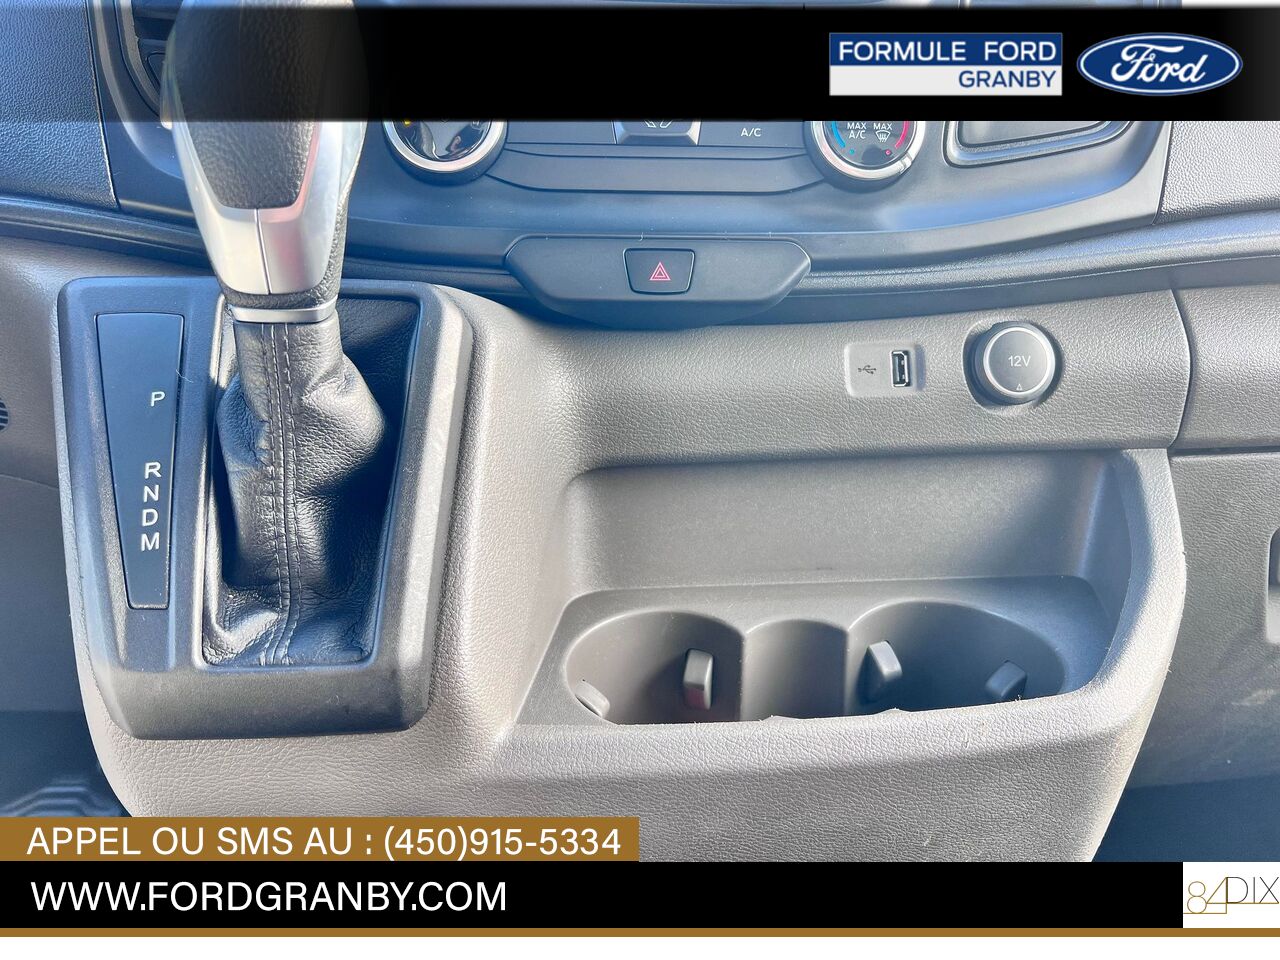 Ford Transit fourgon tronqué 2020 Granby - photo #25